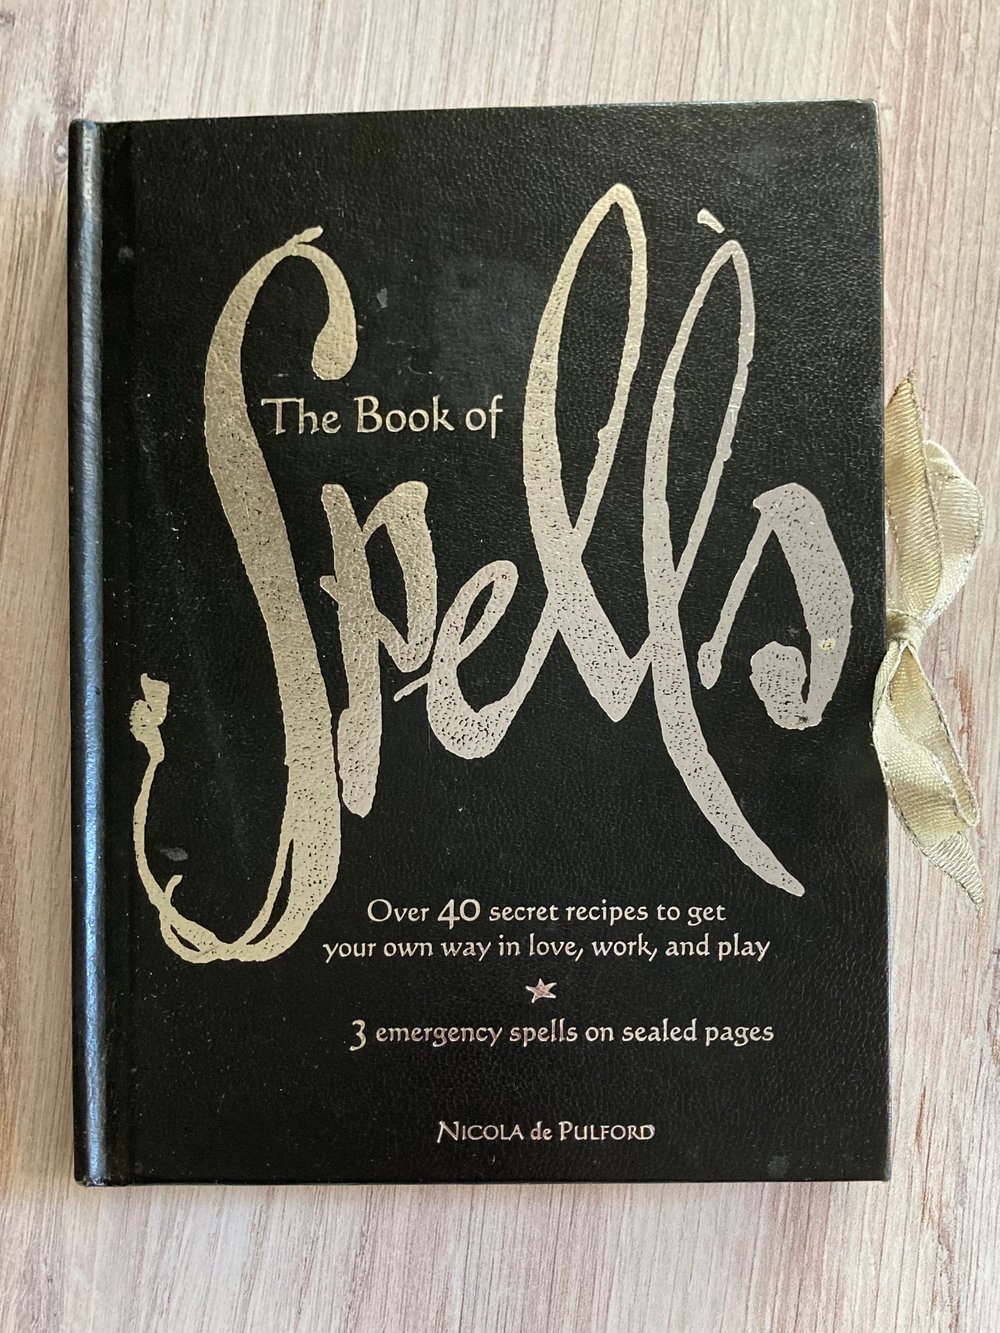 The Book of Spells, by Nicola de Pulford